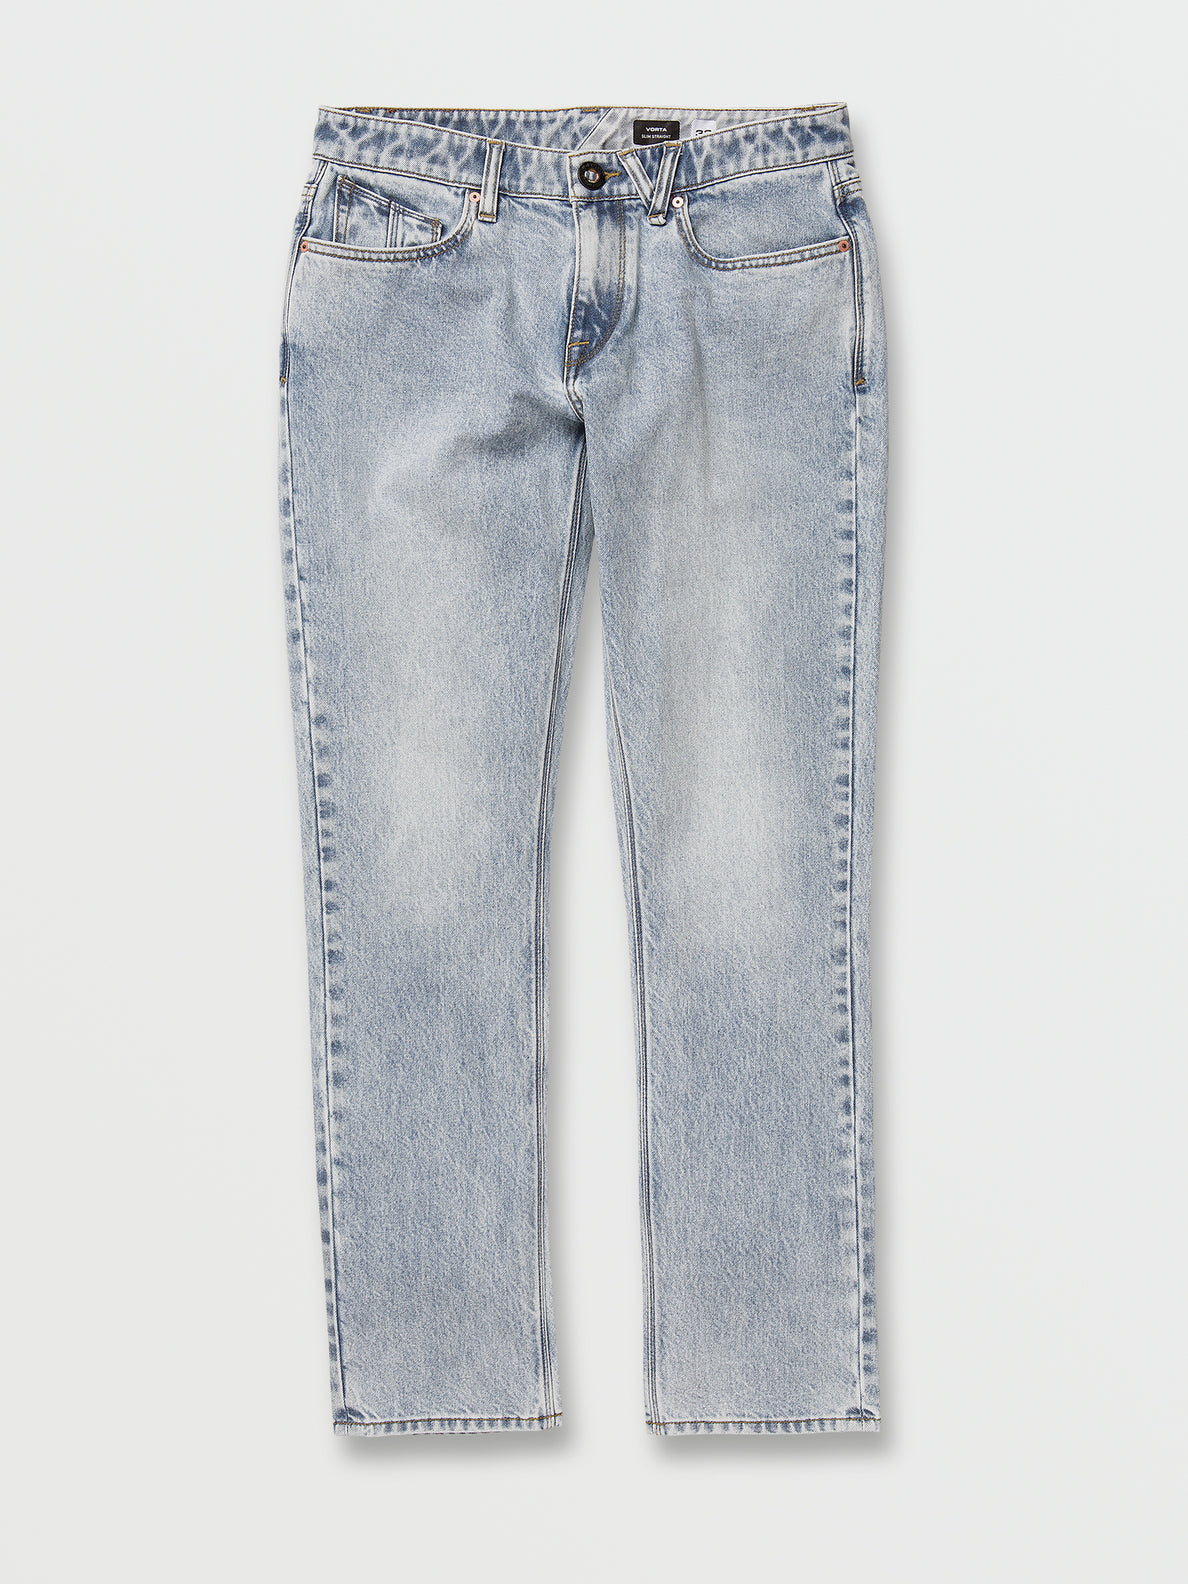 Vorta Slim Fit Jeans - Heavy Worn Faded (A1912302_HWR) [F]